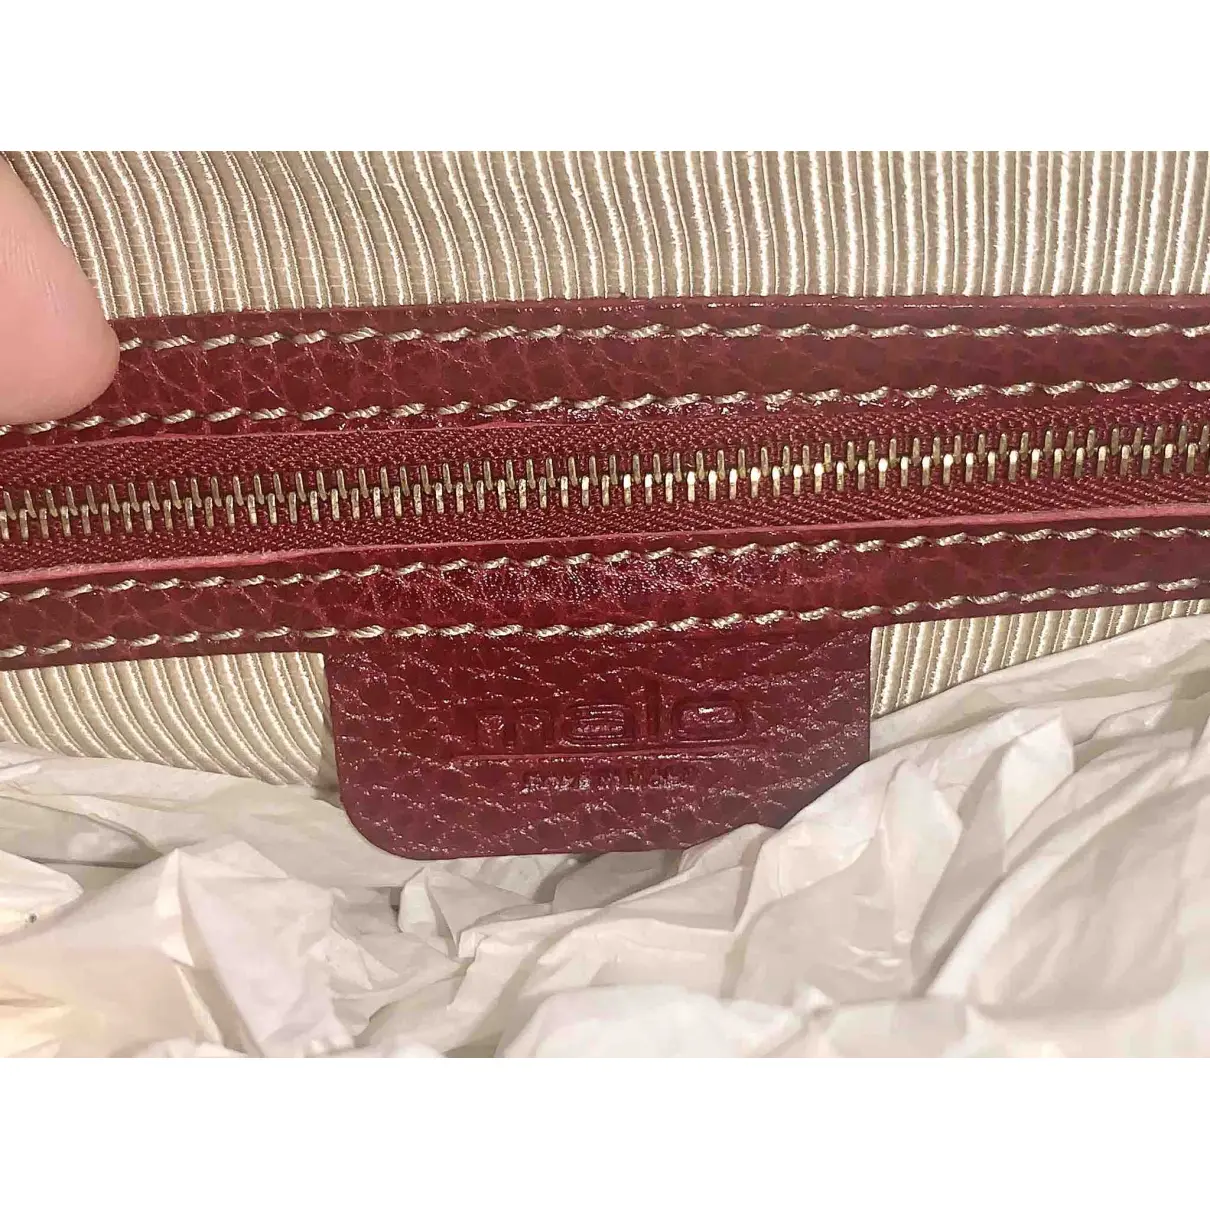 Leather handbag Malo - Vintage